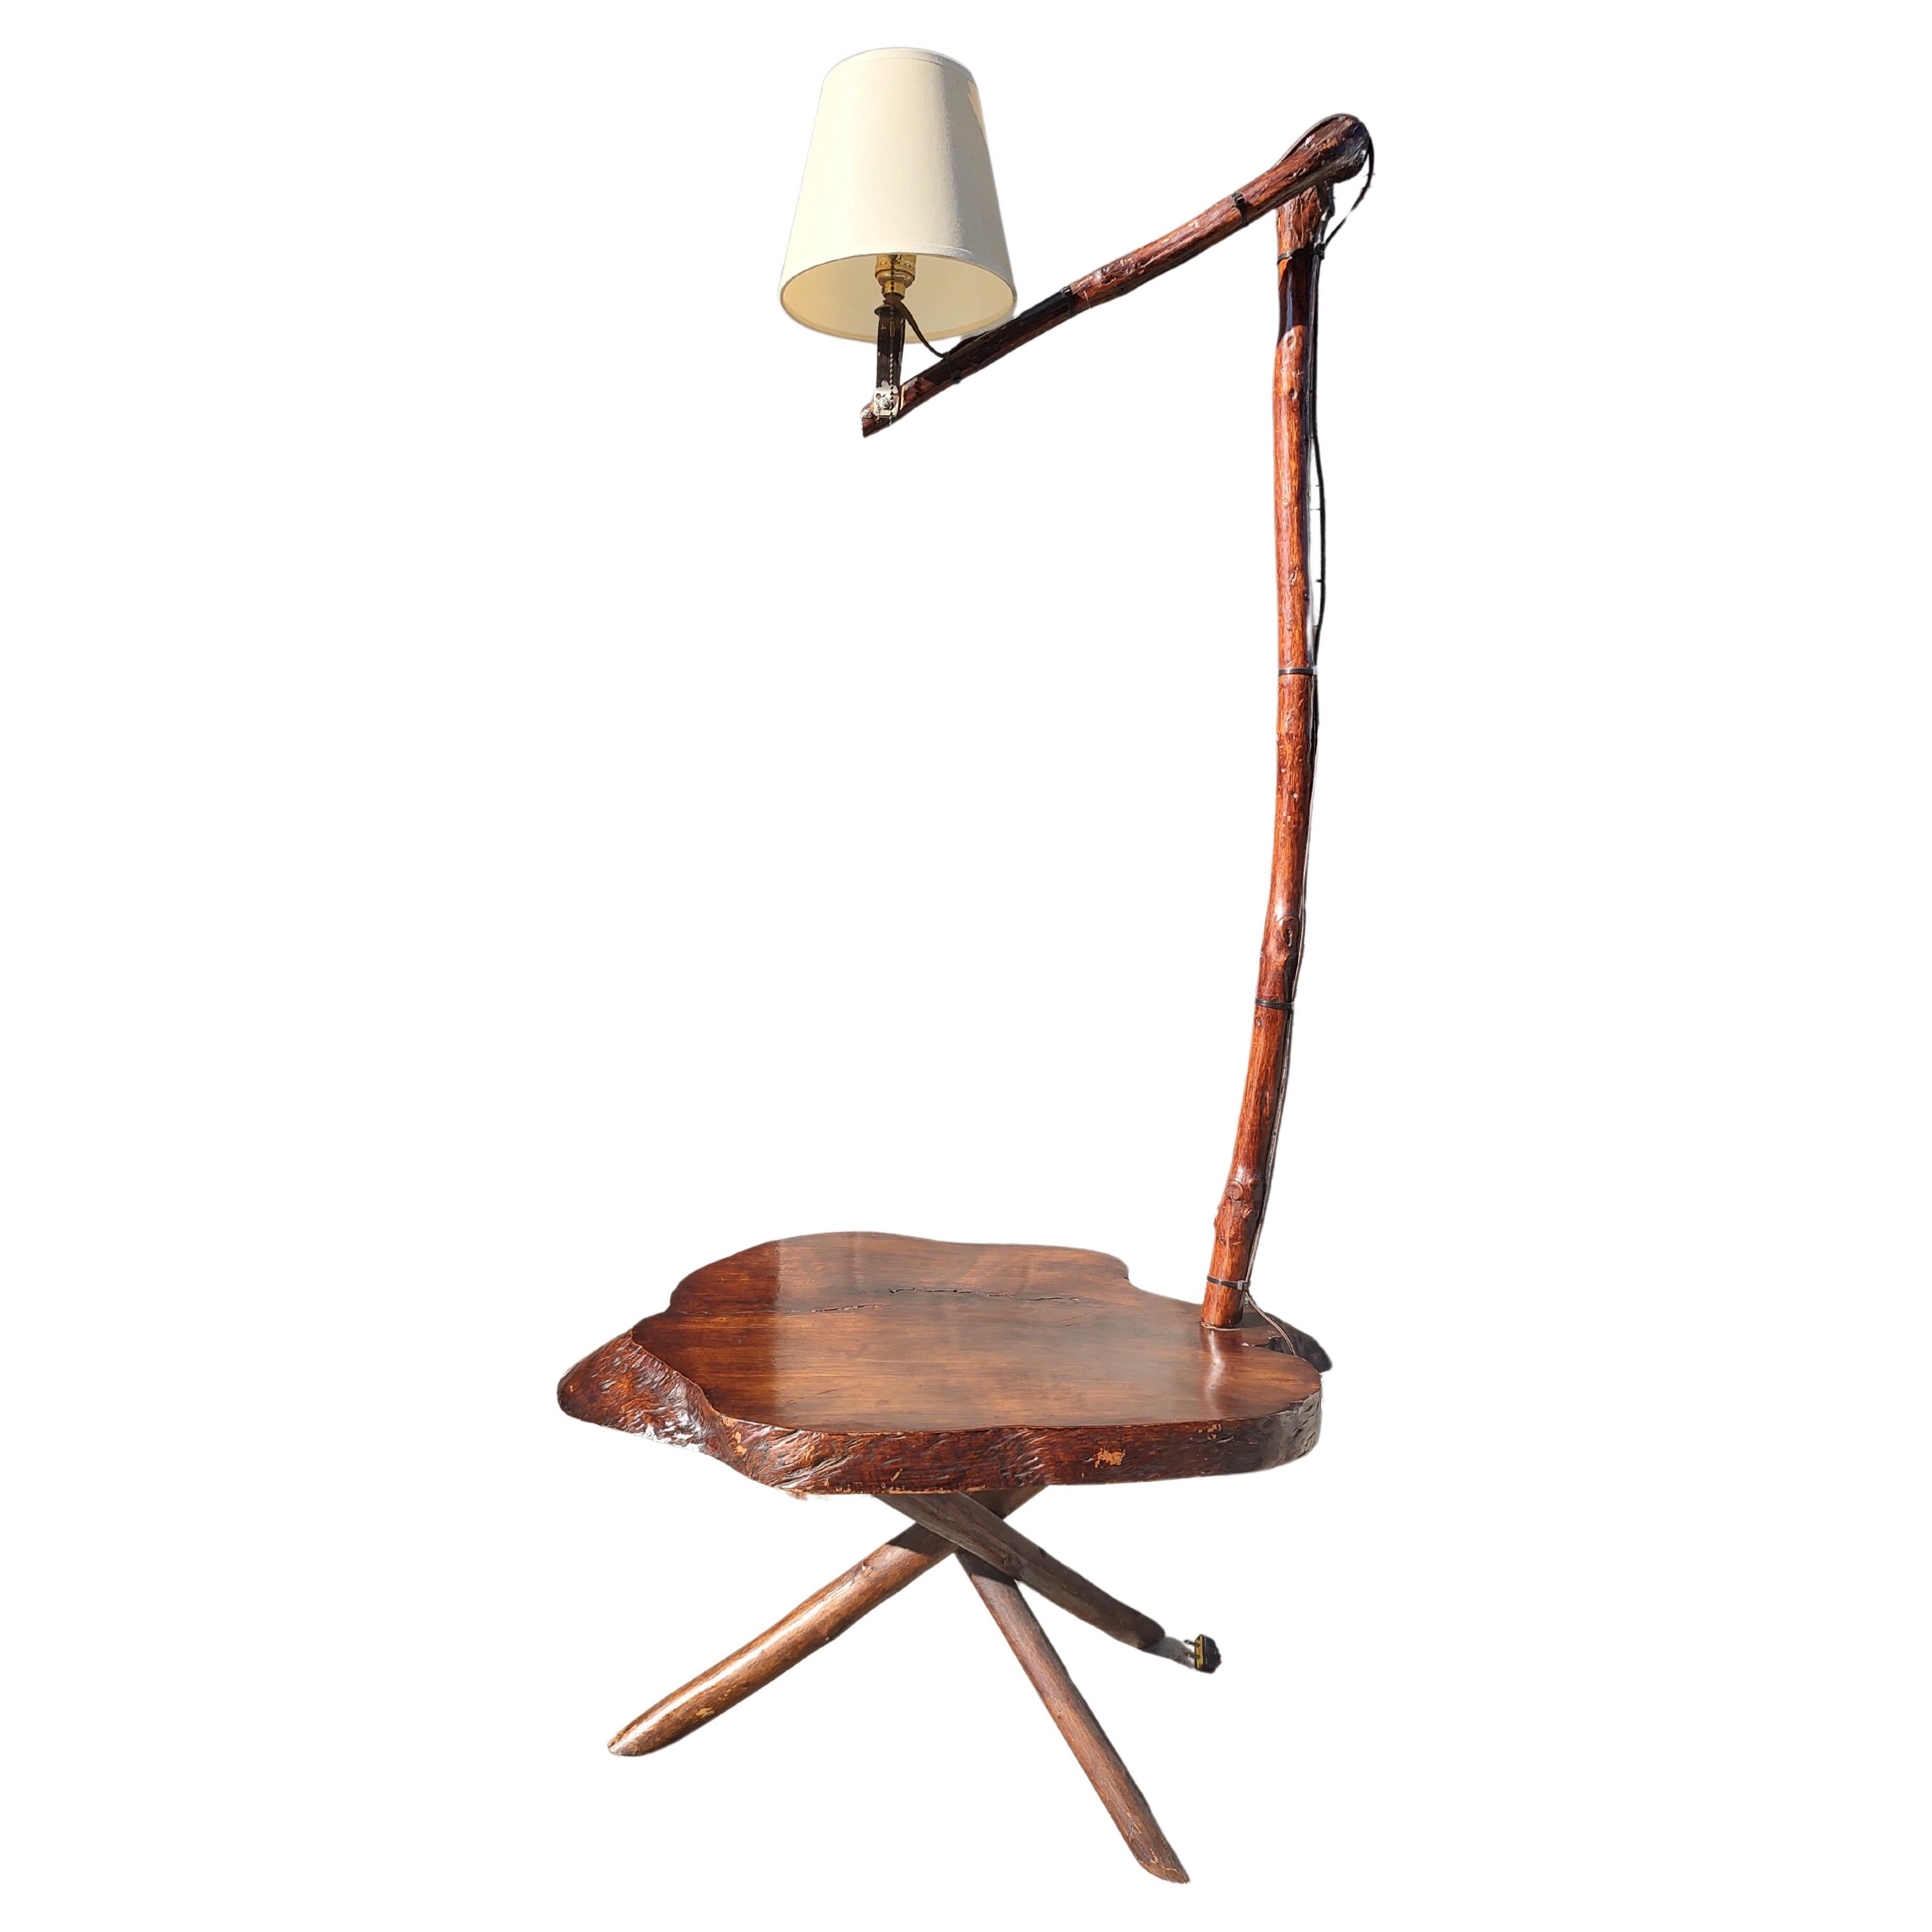 Adirondack Bent Twig Floor Lamp with Tri Leg Table Base